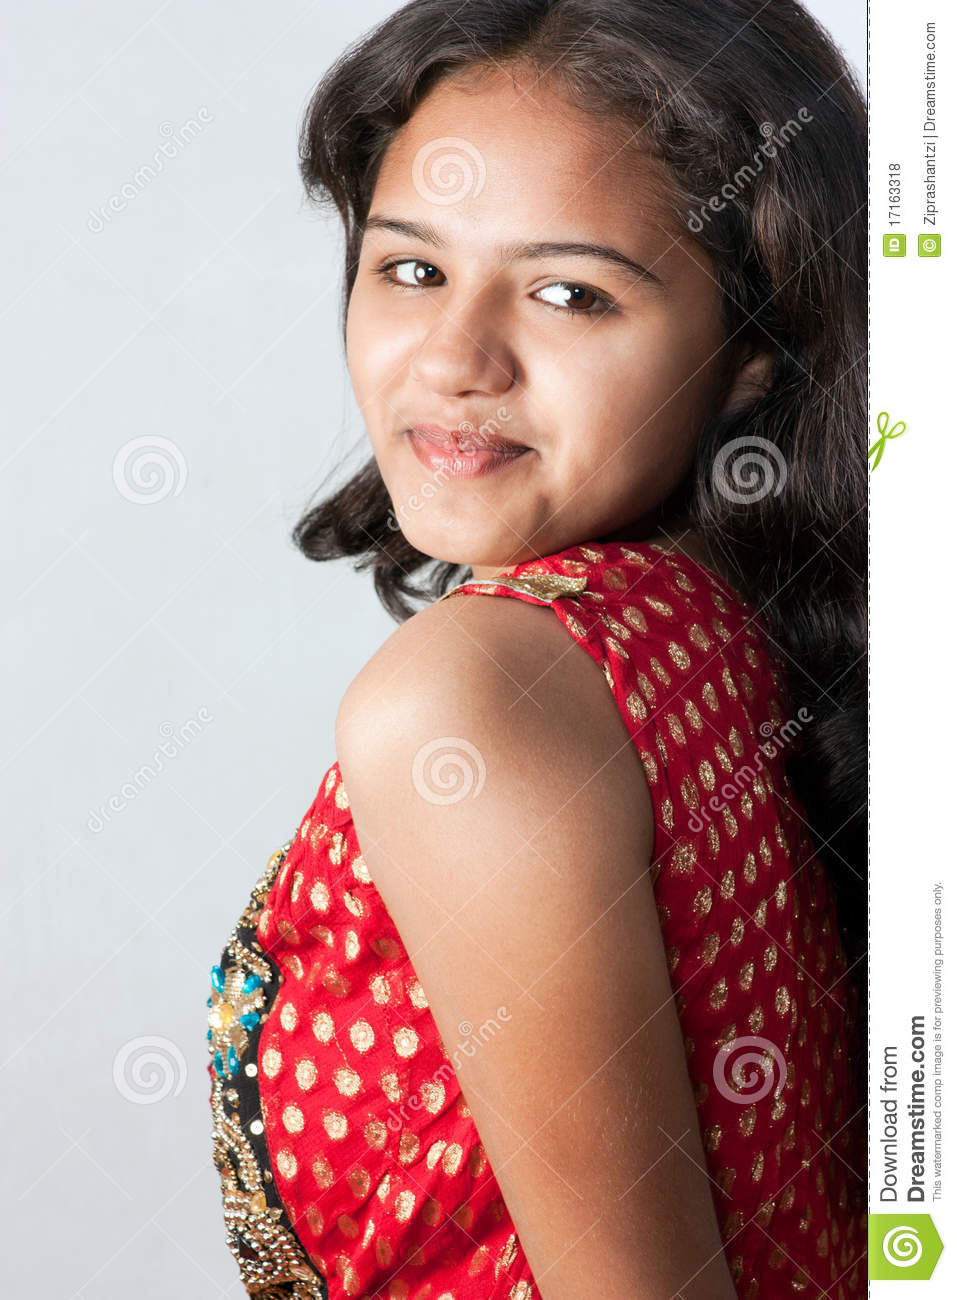 Shy Smile Of Beautiful Indian Girl Royalty Free Stock Photos   Image